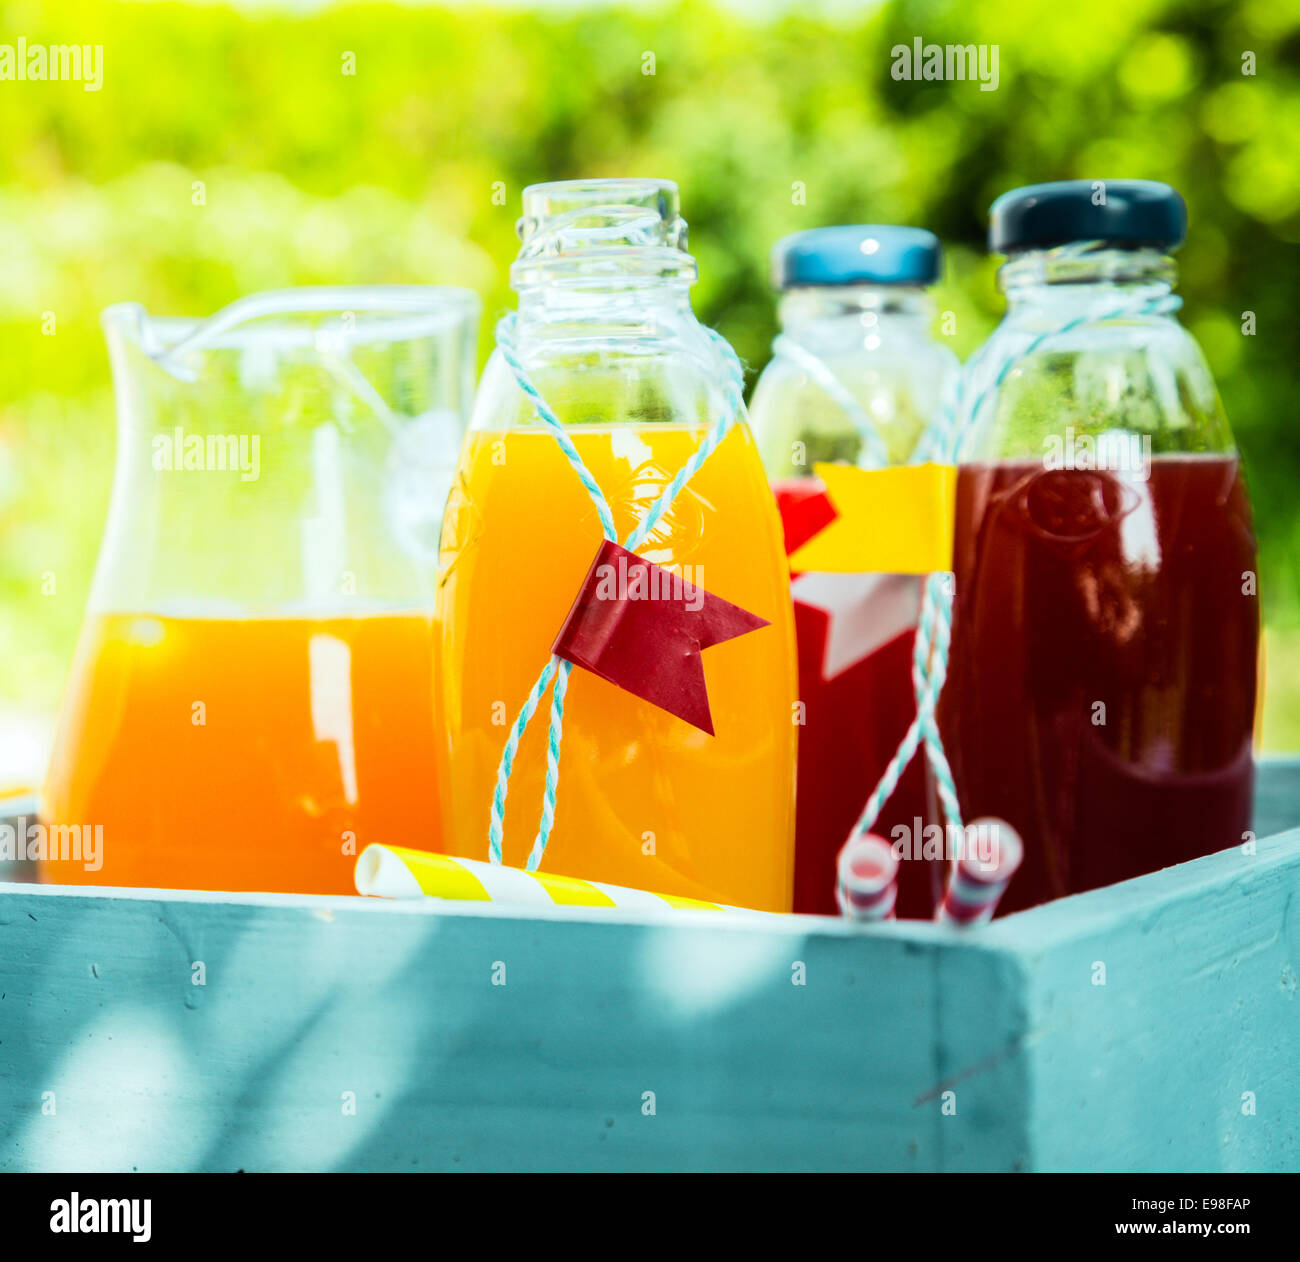 https://c8.alamy.com/comp/E98FAP/homemade-healthy-freshly-squeezed-orange-and-berry-juice-in-glass-E98FAP.jpg